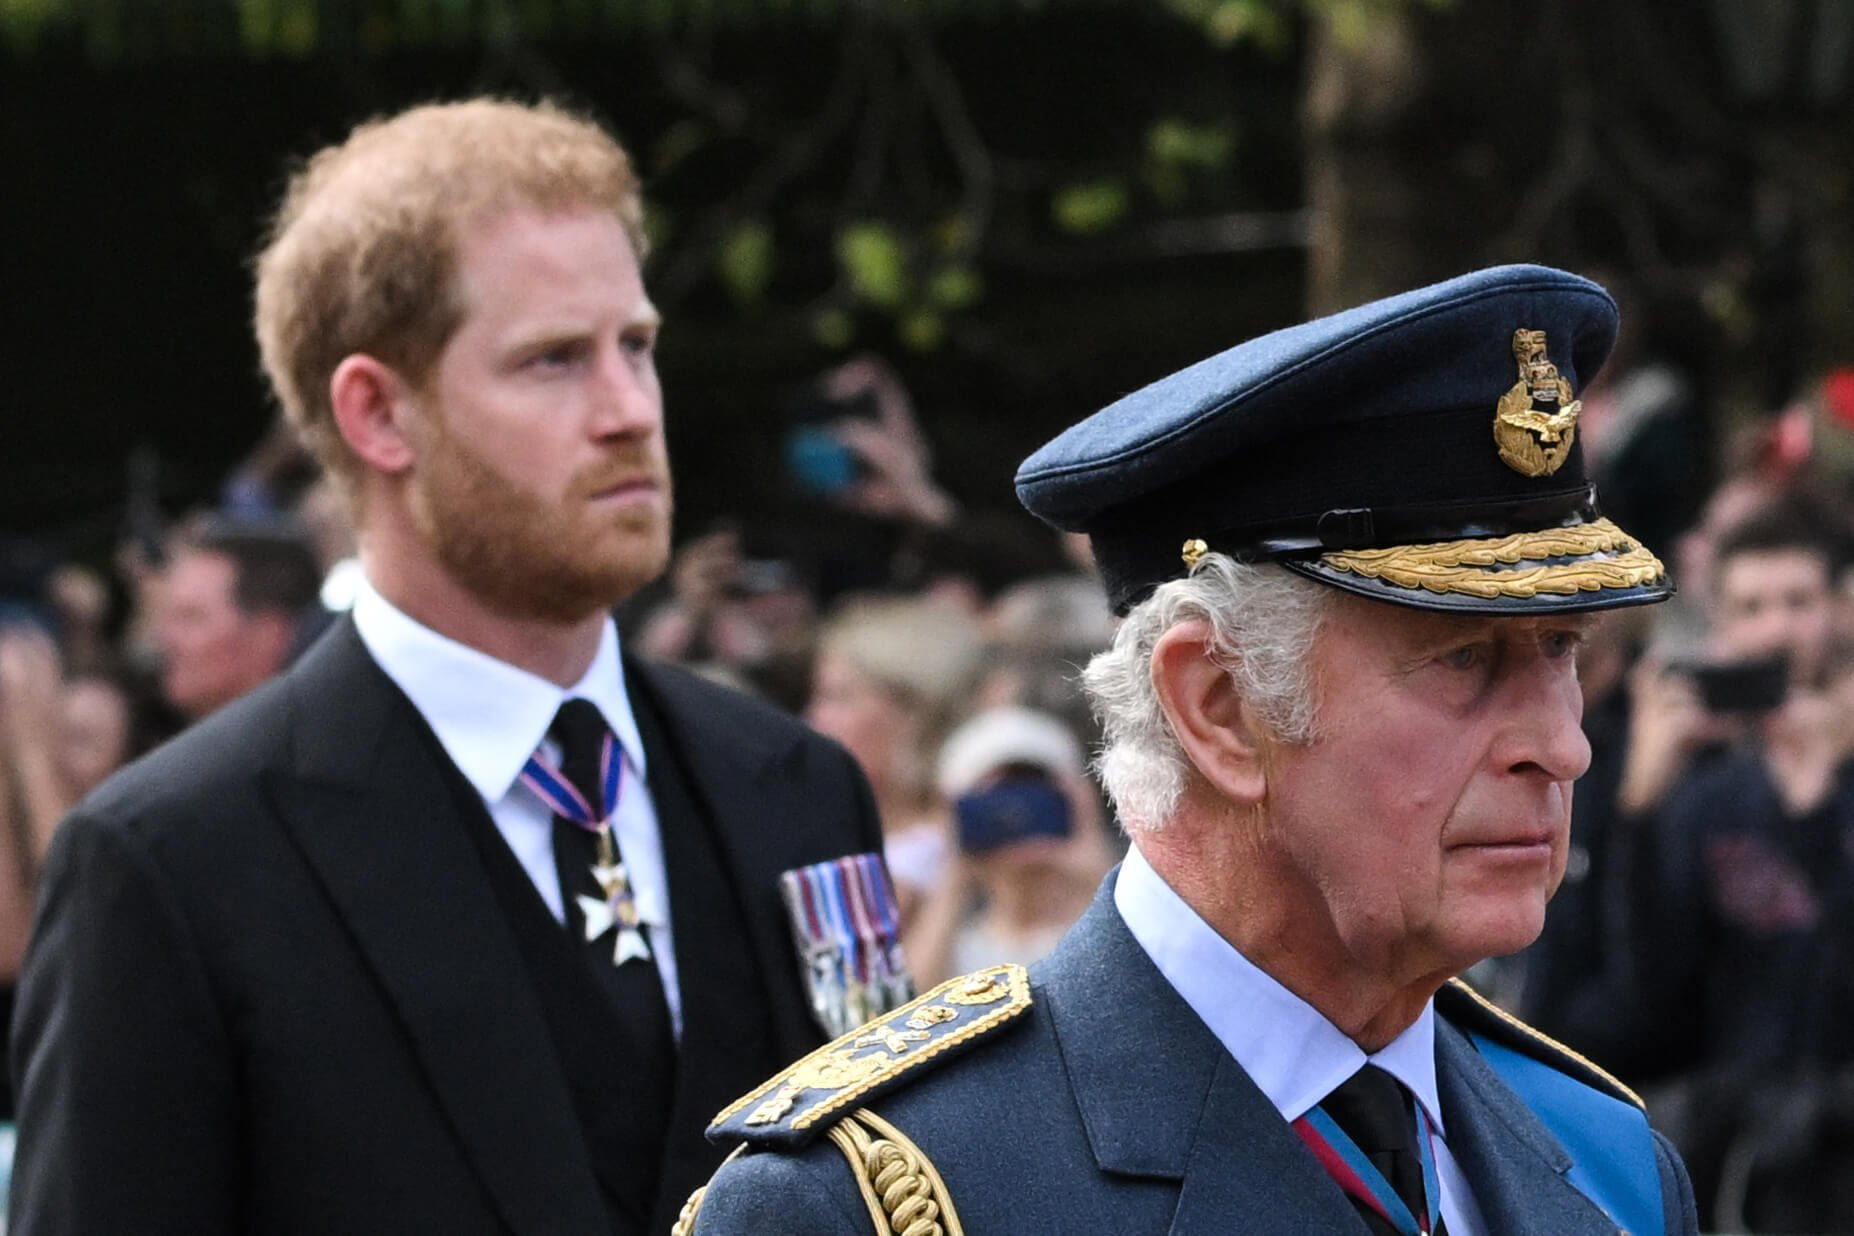 Prince Harry in view behind King Charles III in uniform. Prince Harry will attend King Charles' coronation